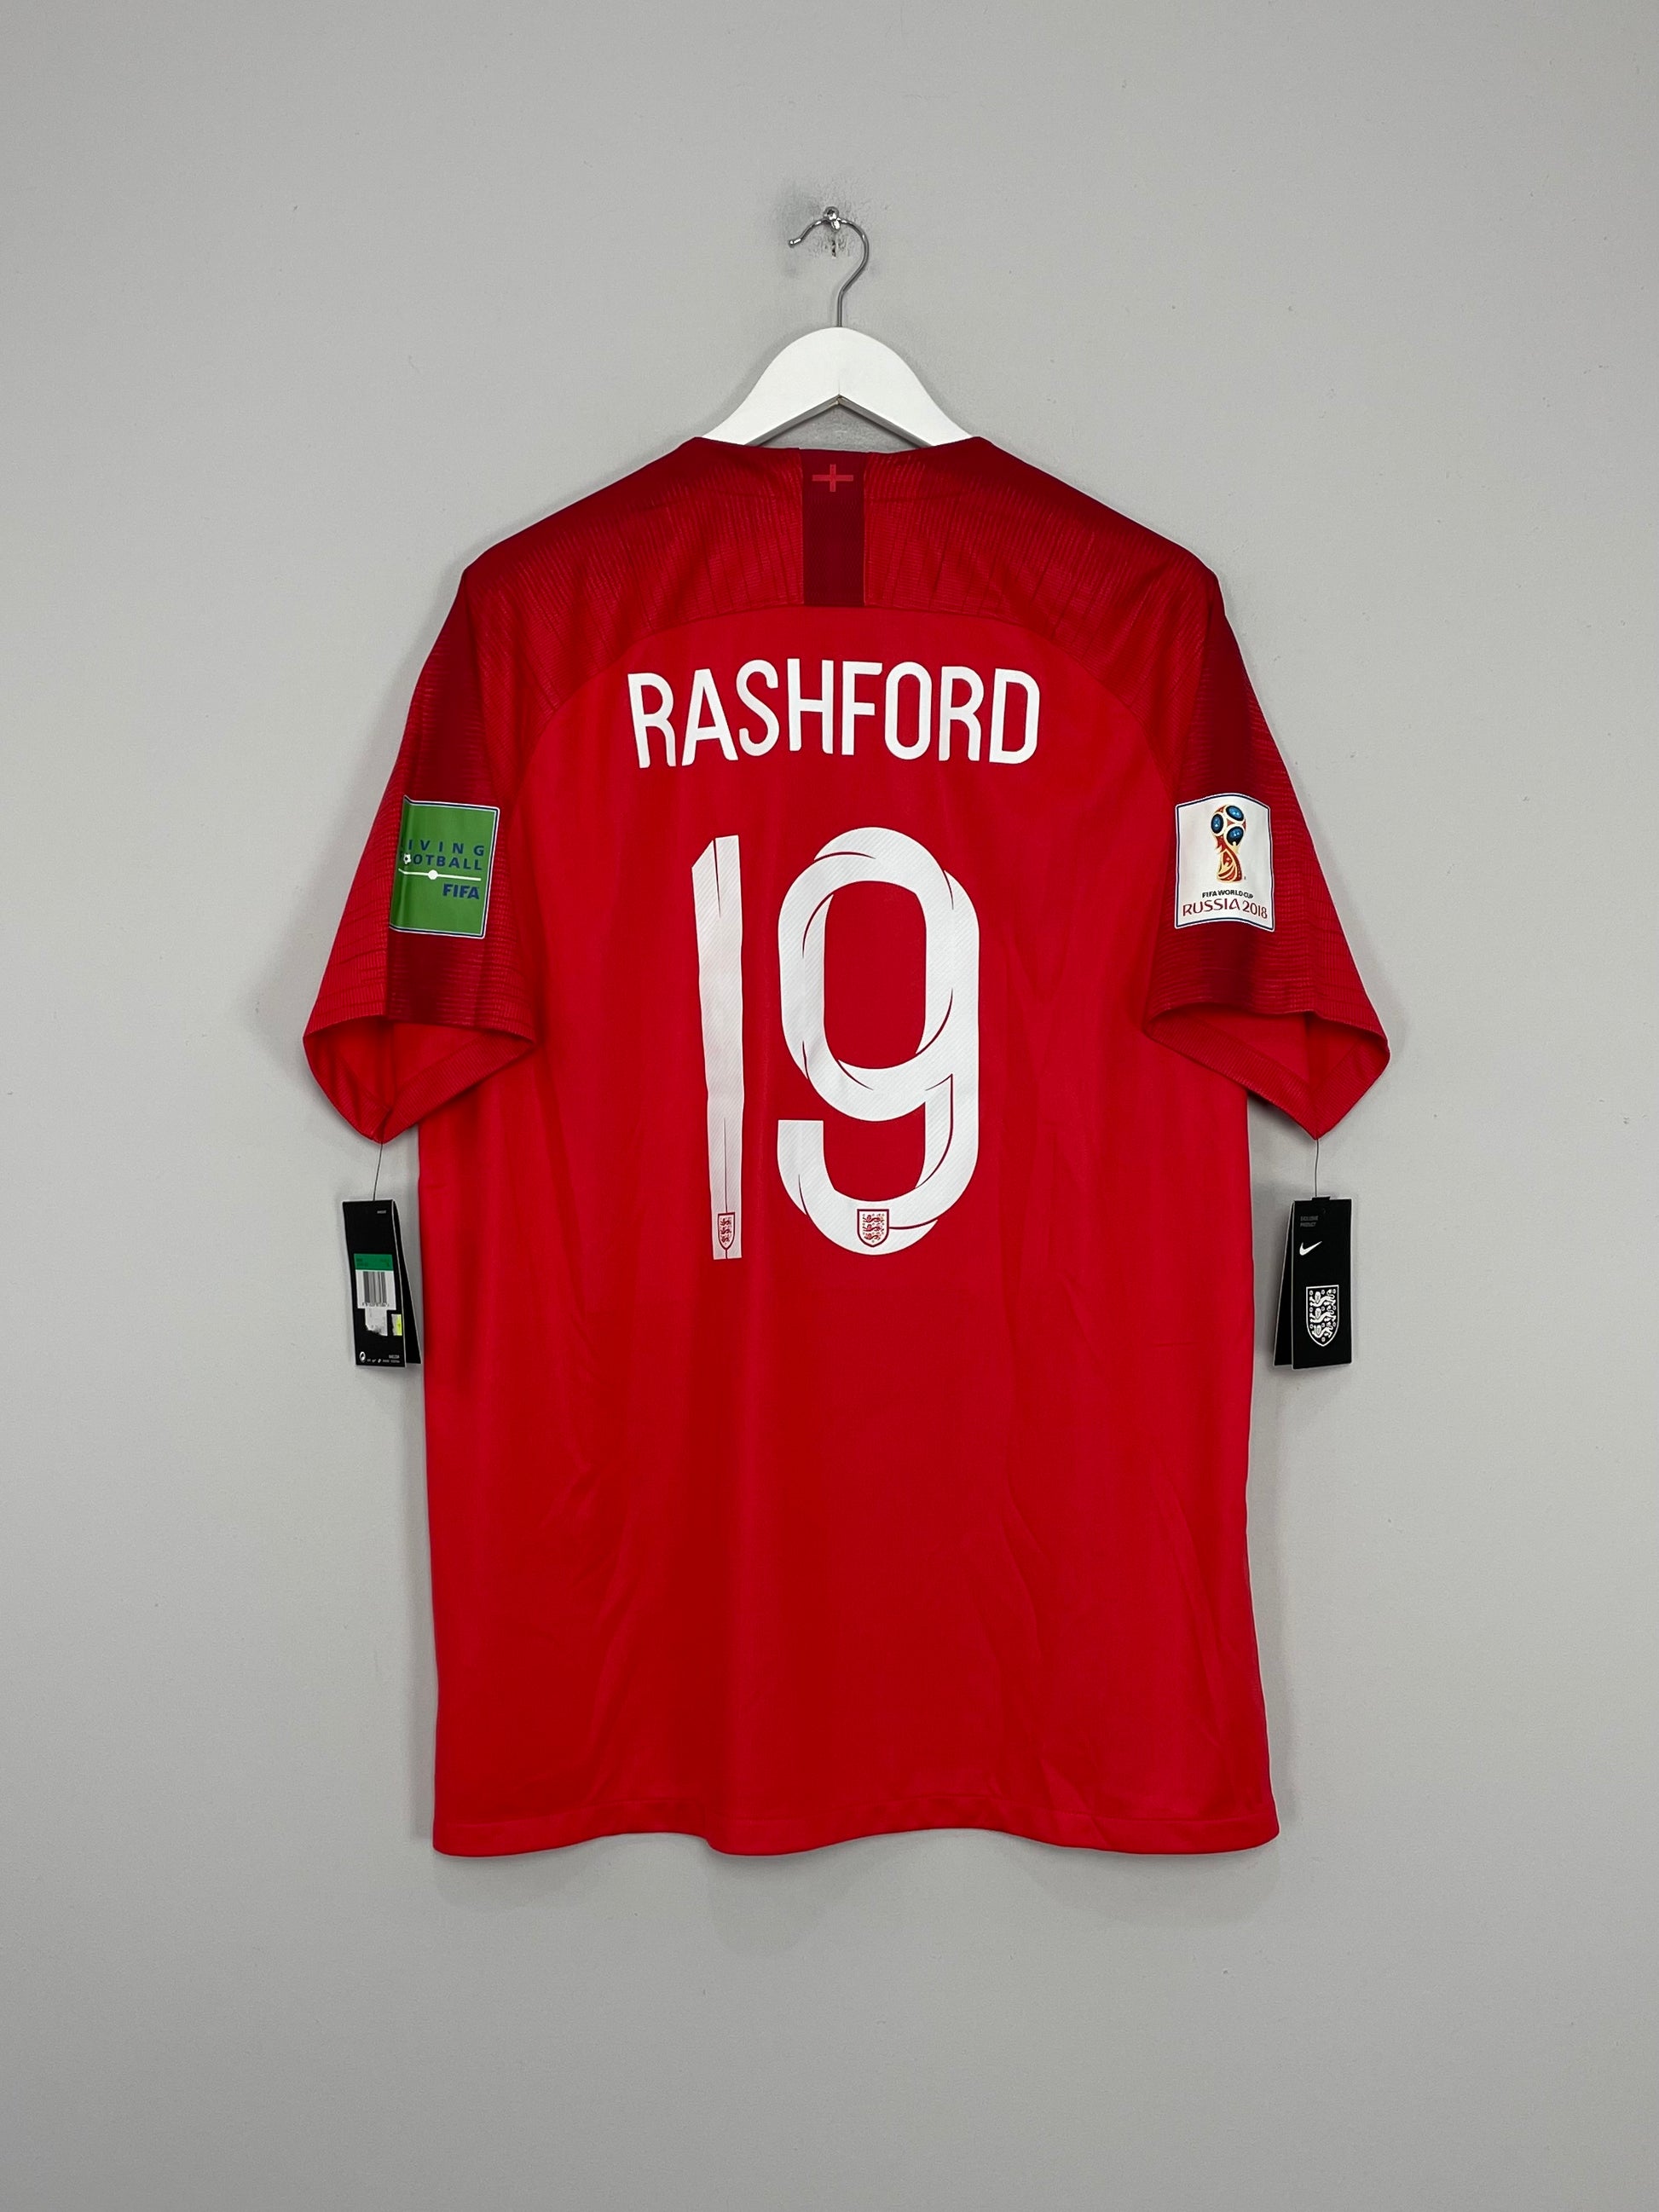 Image of the England Rashford shirt from the 2018/19 season